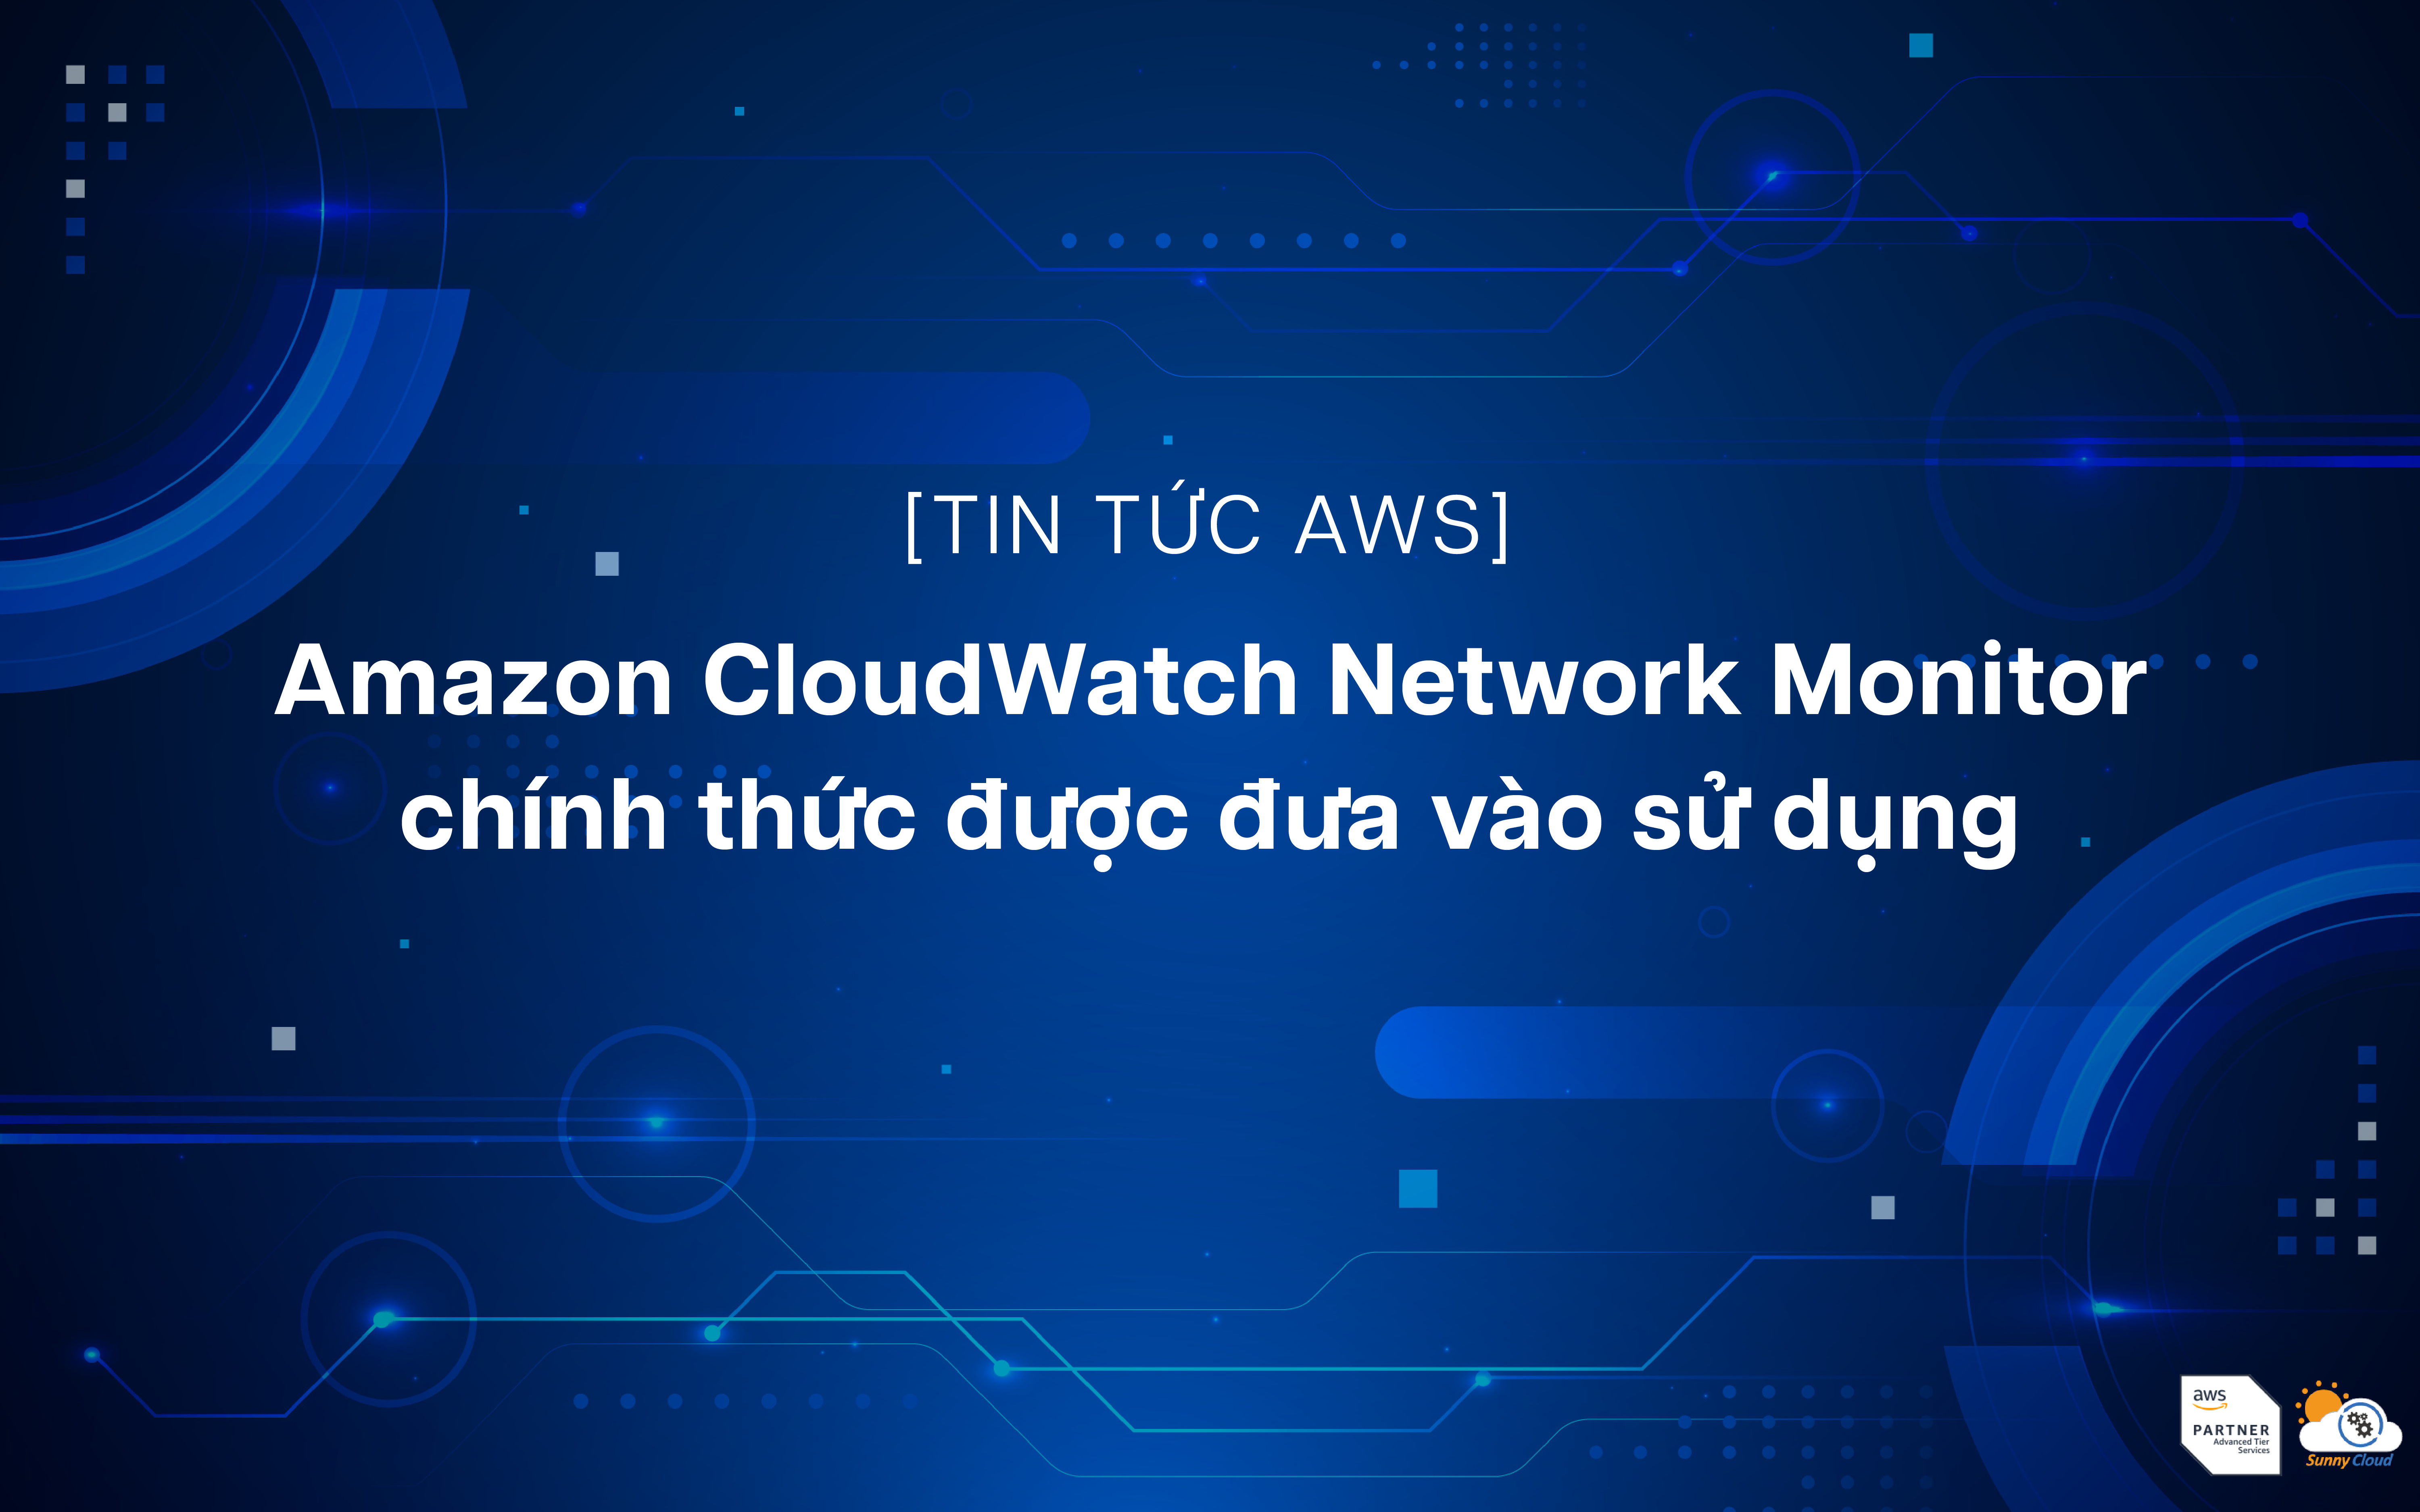 Amazon CloudWatch Network Monitor chính thức ra mắt